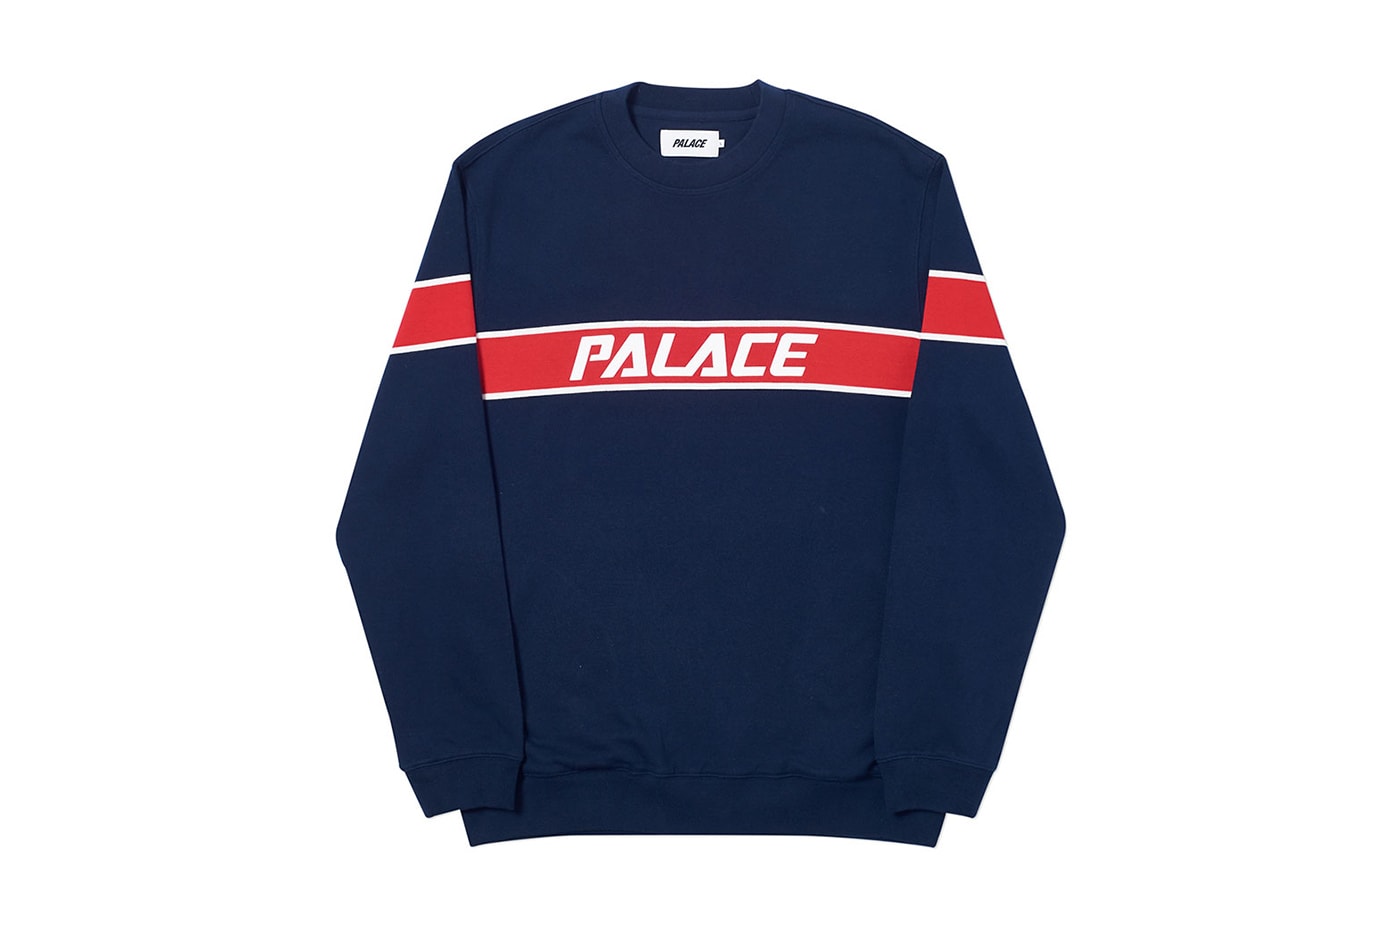 Palace 2019 夏季衛衣系列一覽